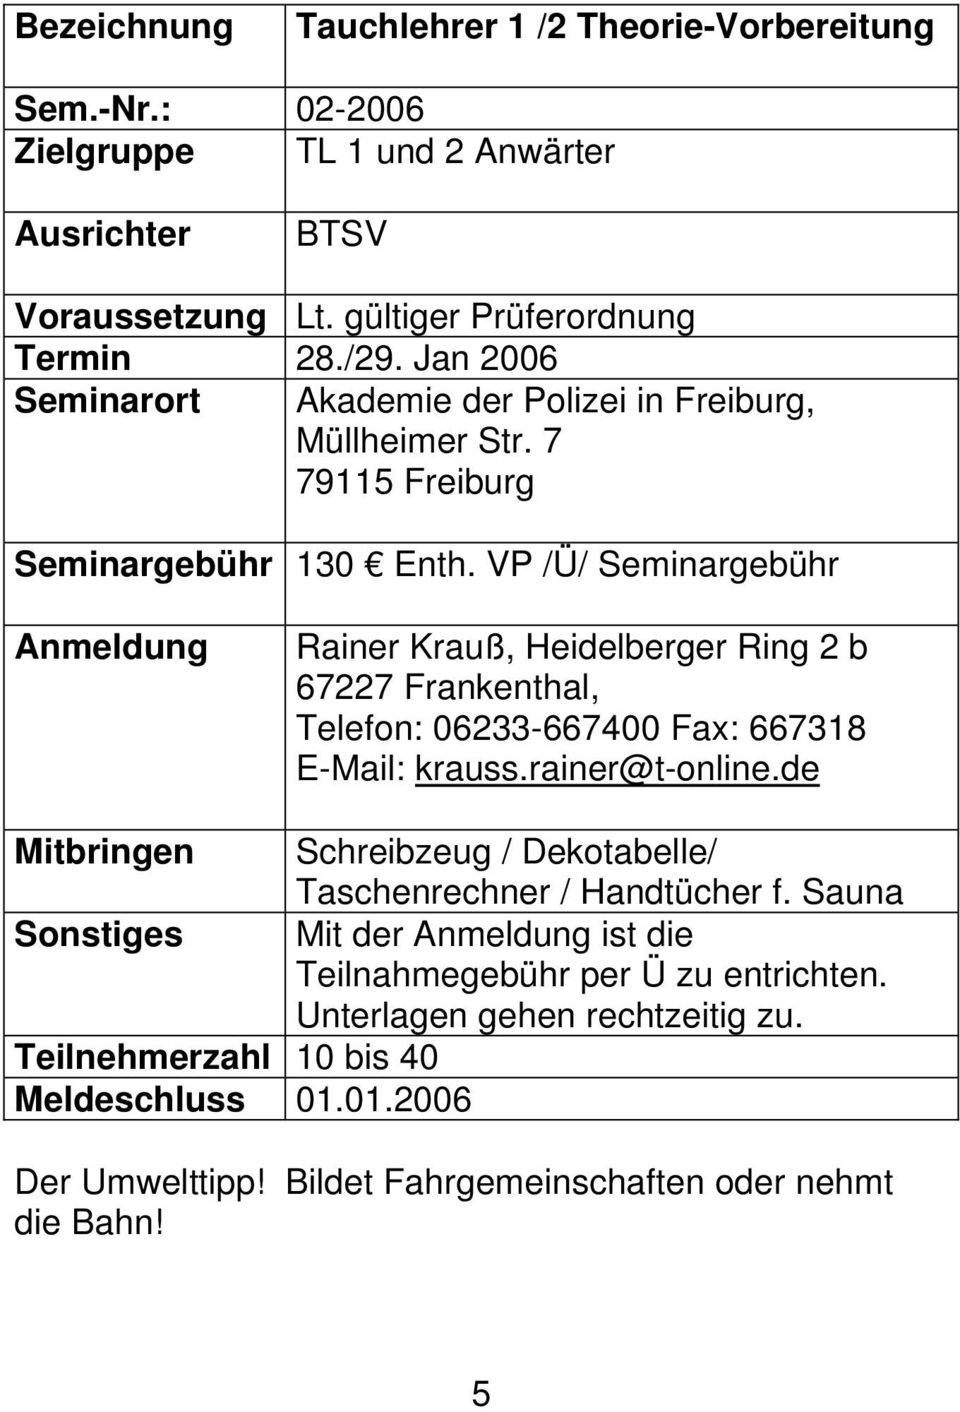 VP /Ü/ Seminargebühr Anmeldung Rainer Krauß, Heidelberger Ring 2 b 67227 Frankenthal, Telefon: 06233-667400 Fax: 667318 E-Mail: krauss.rainer@t-online.